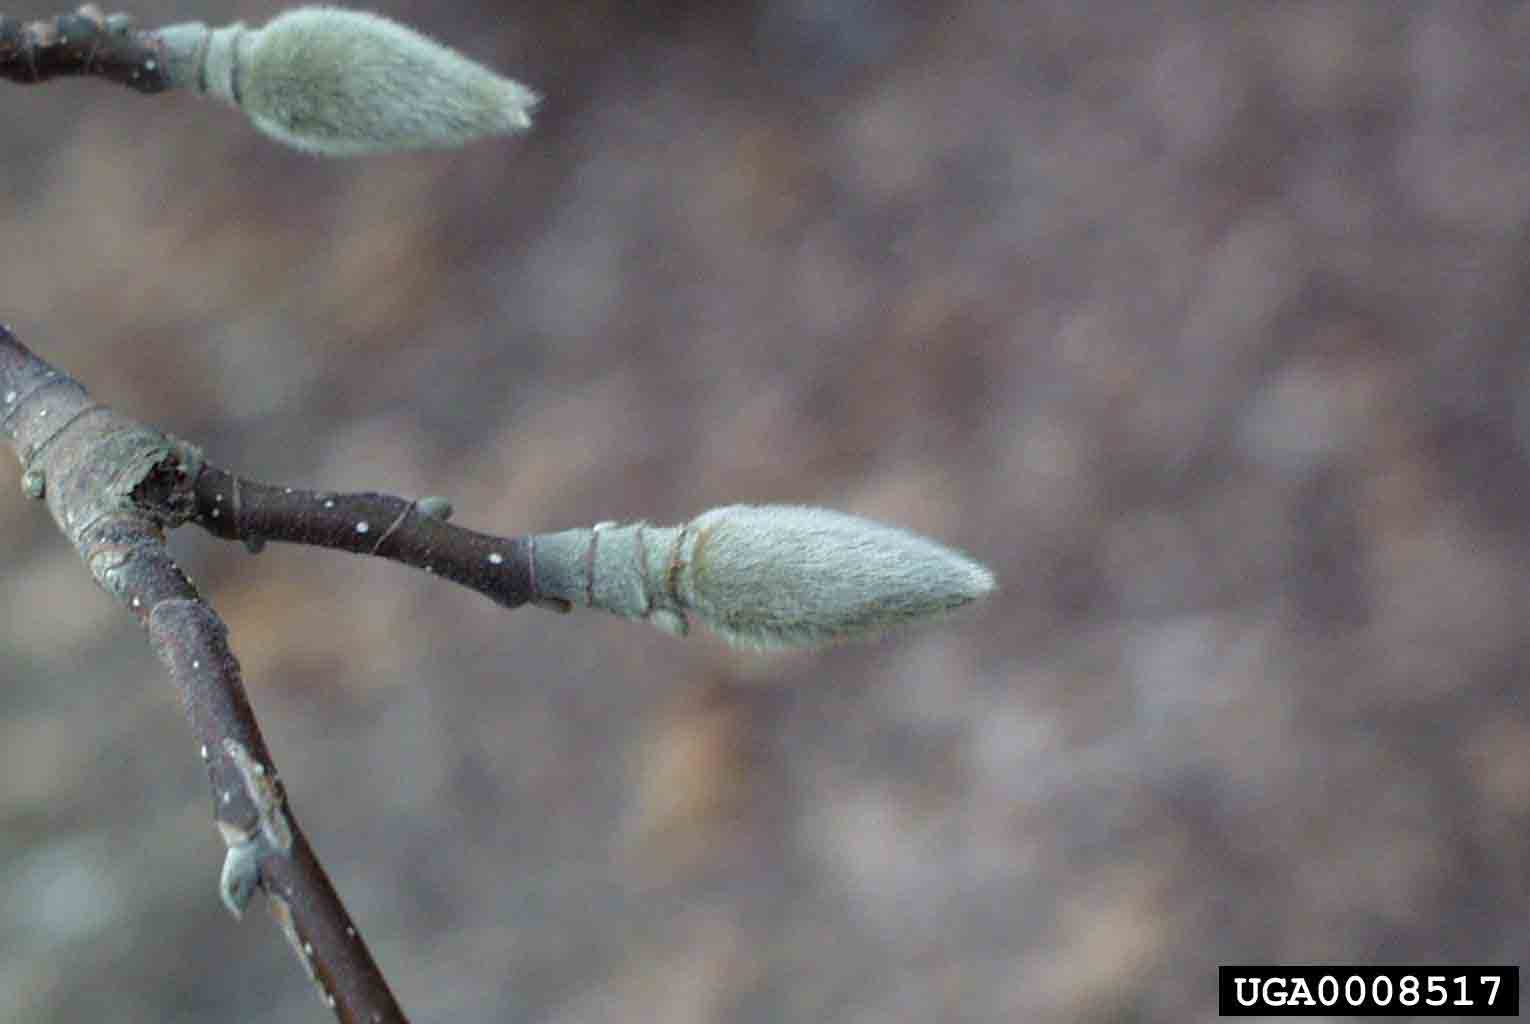 Saucer magnolia twig with bud